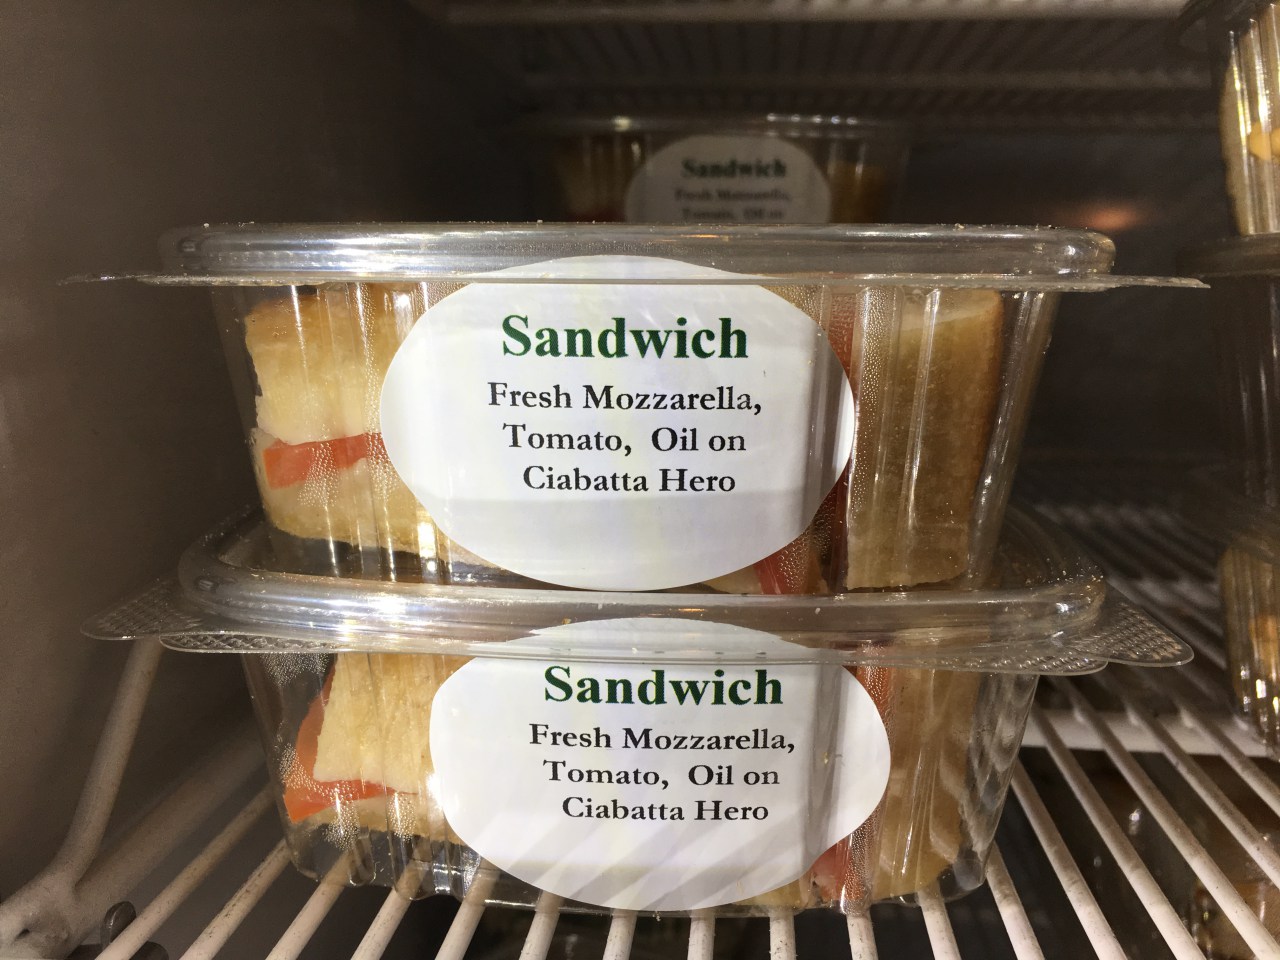 Alitalia JFK Lounge Review: Sandwiches